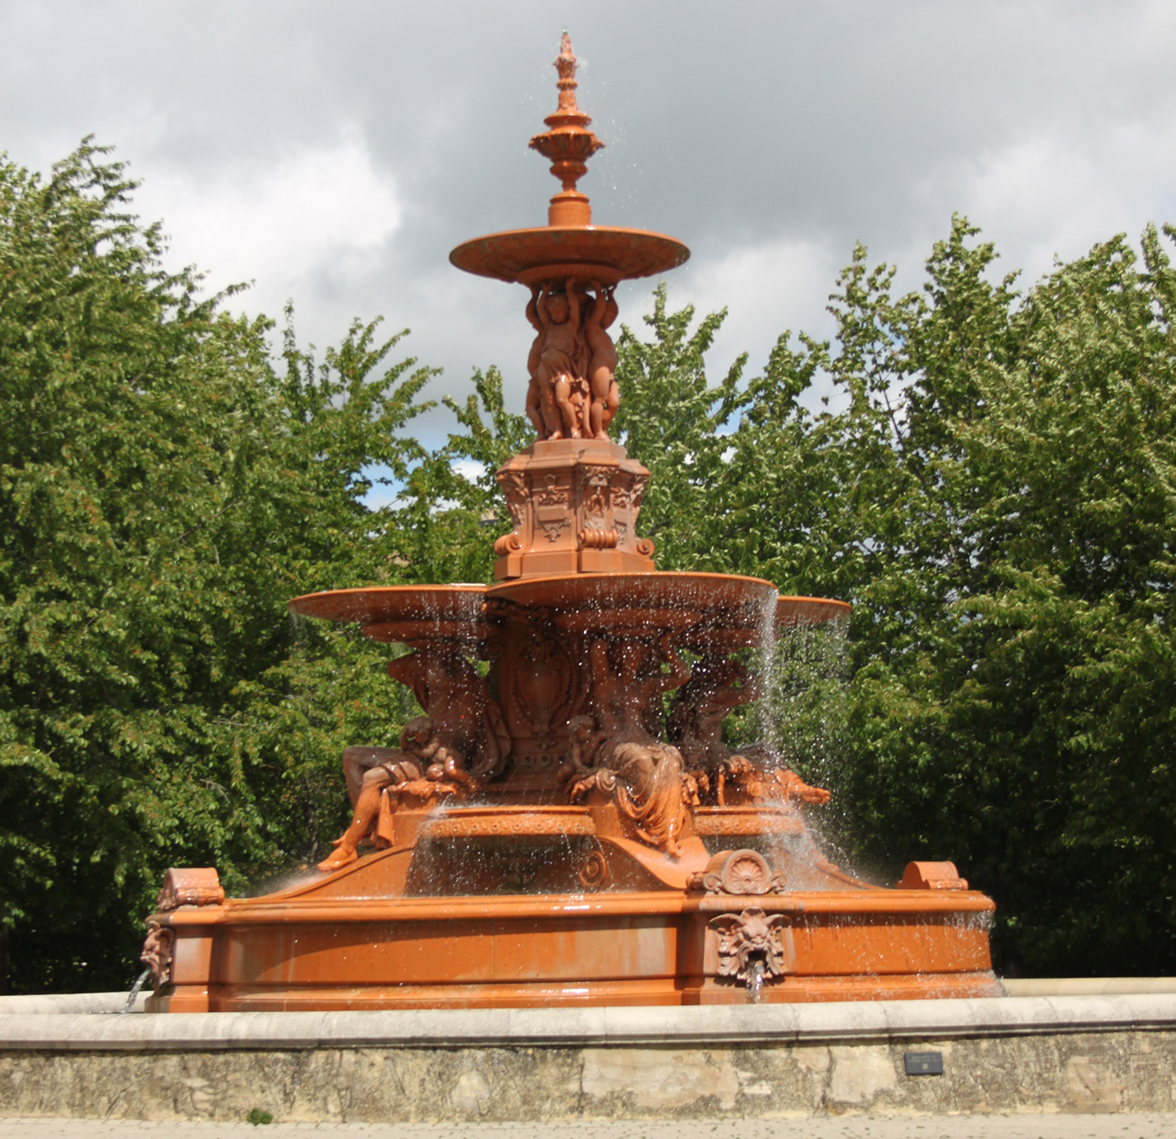 Image entitled Fountain in Victoria Park, Ashford